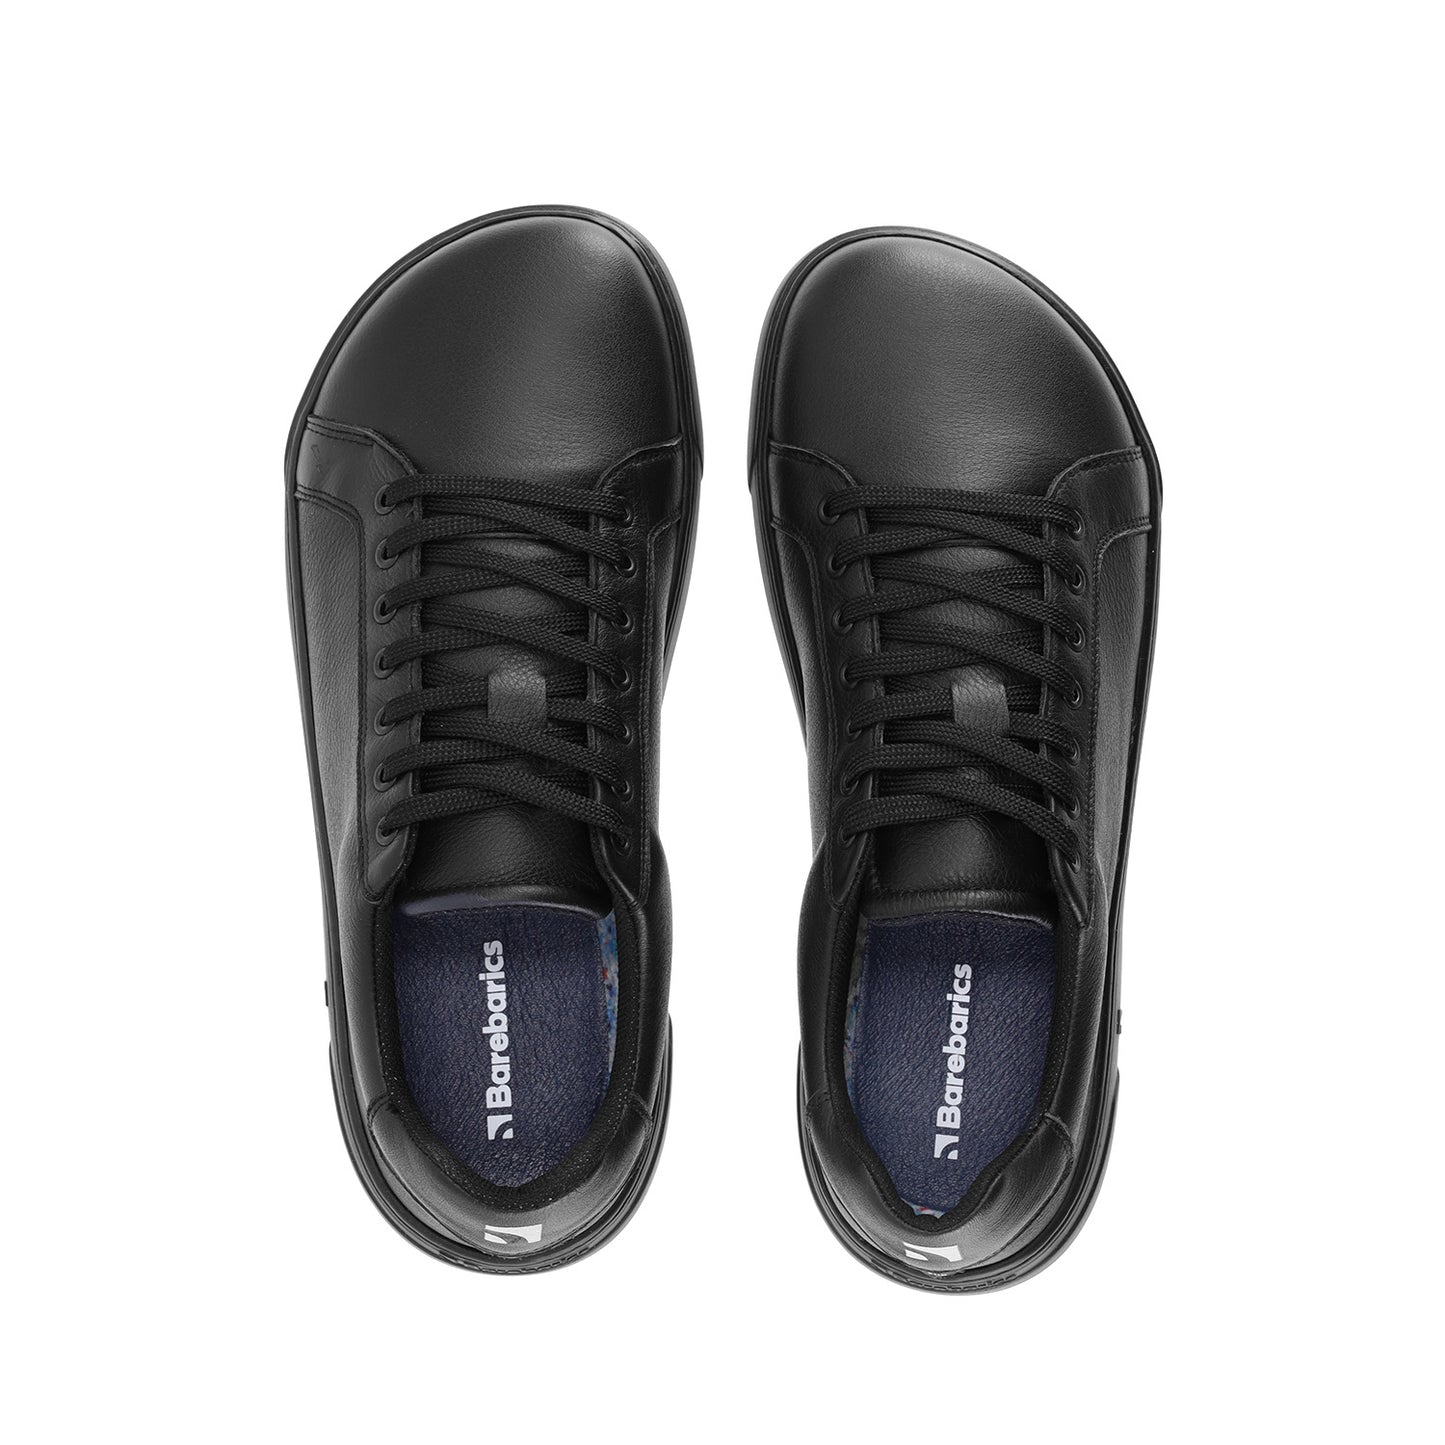 Barefoot Sneakers Barebarics Zoom - All Black - Leather 5 OzBarefoot Australia